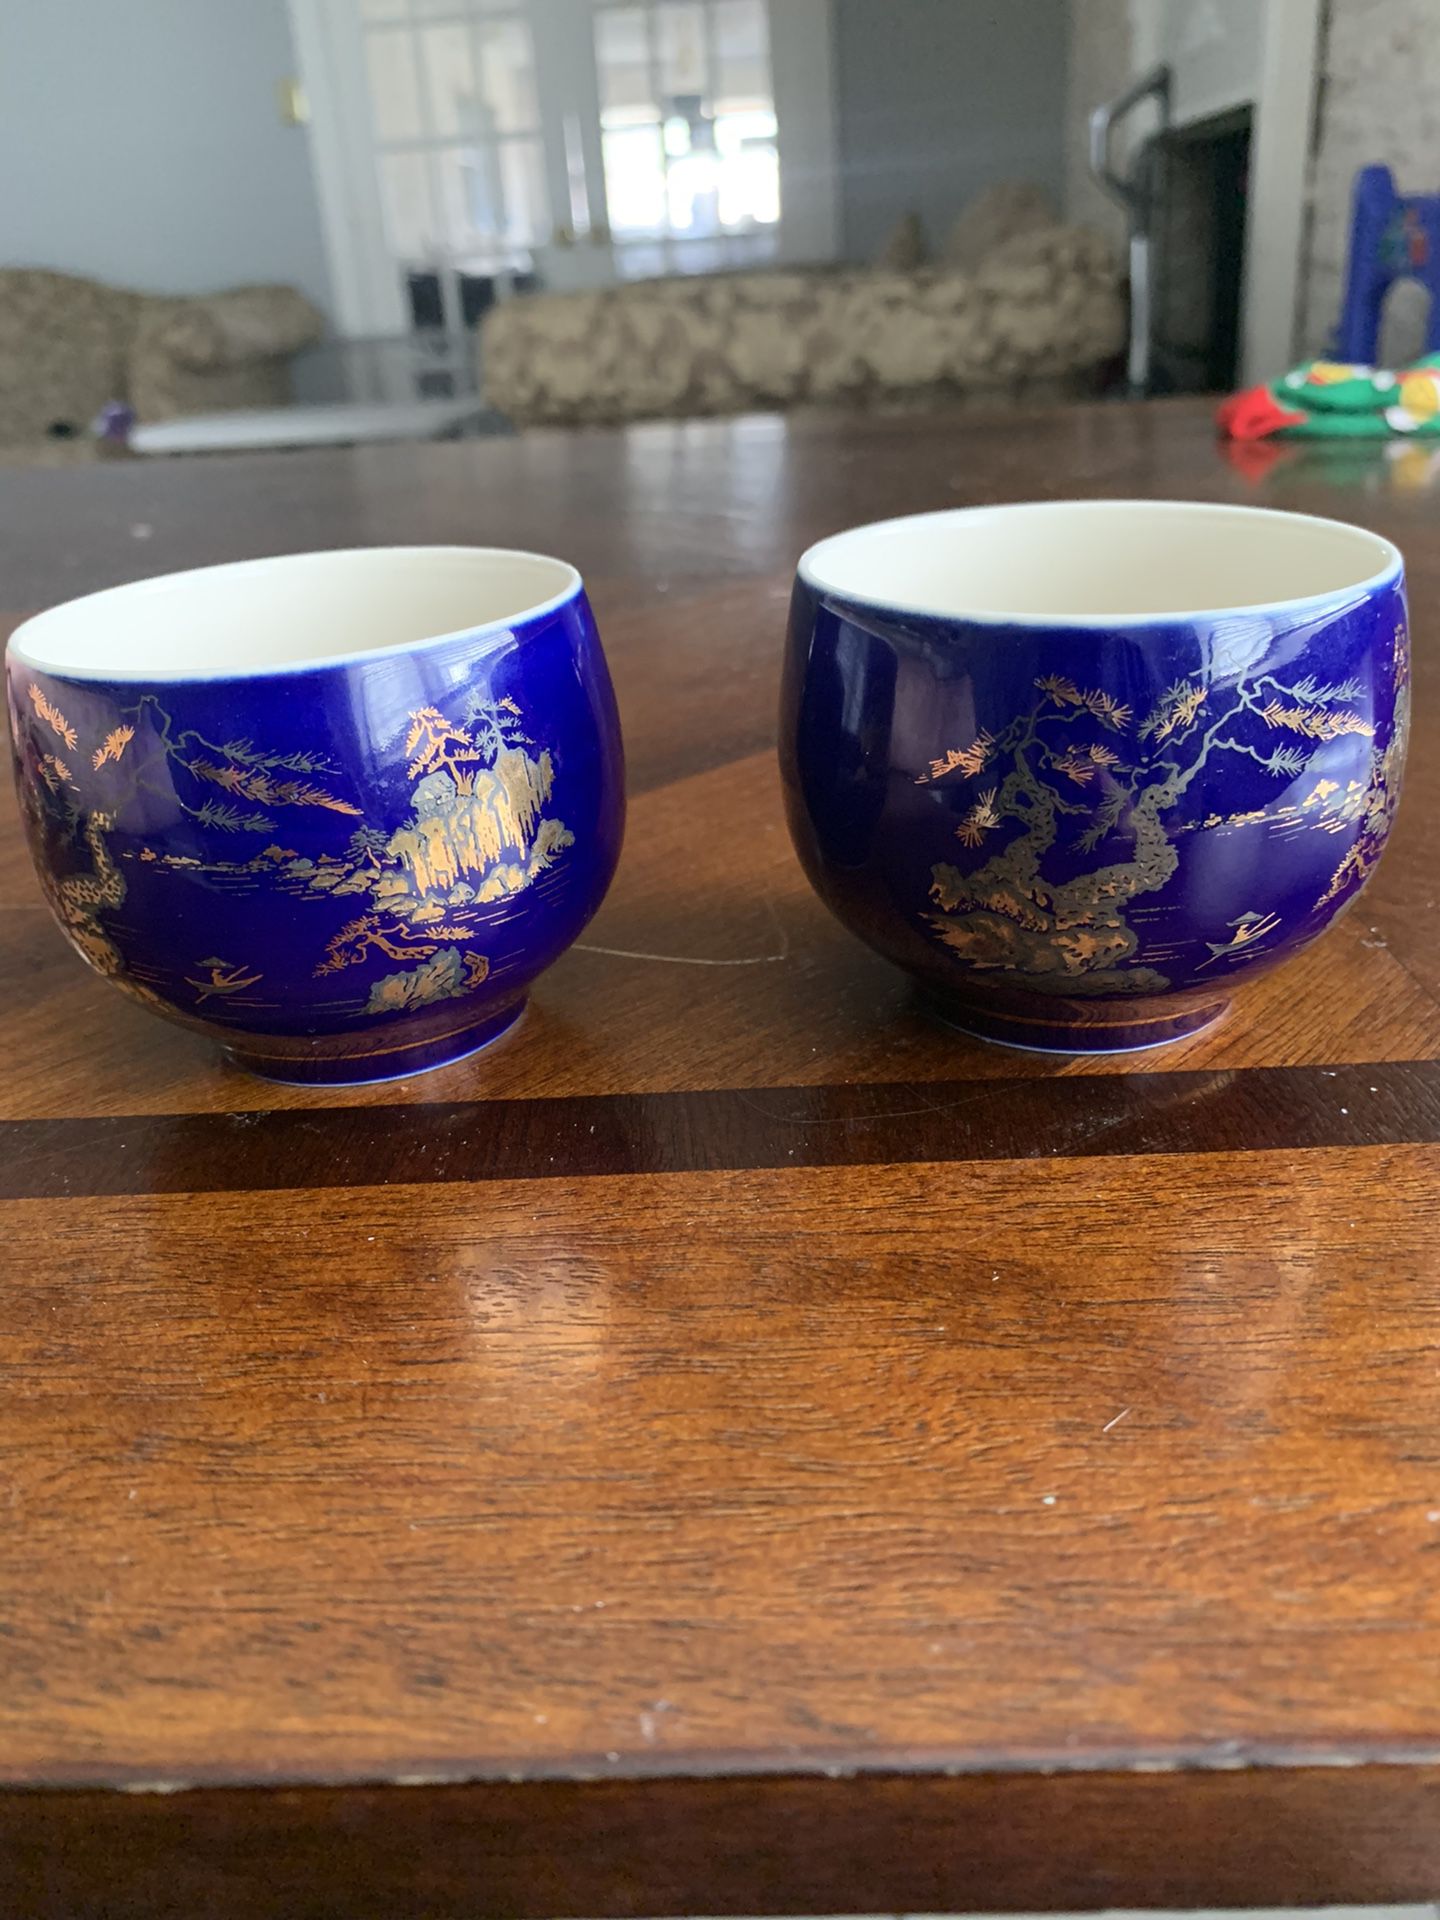 Decorative tea cups from Japan